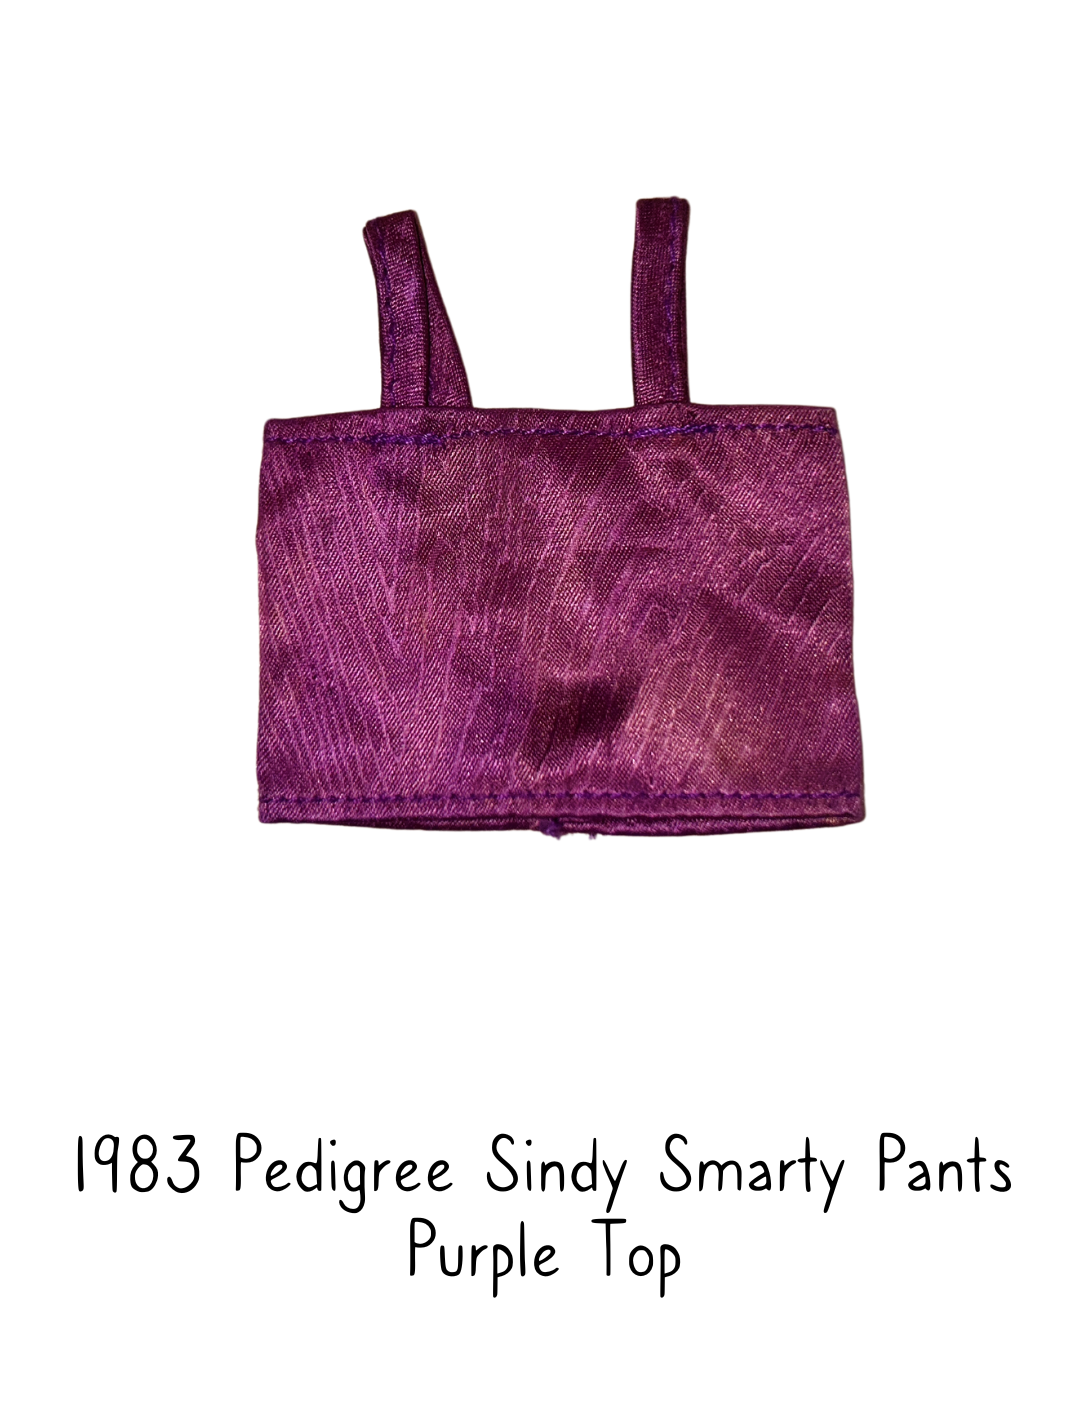 1983 Pedigree Sindy Fashion Doll Smarty Pants Purple Top